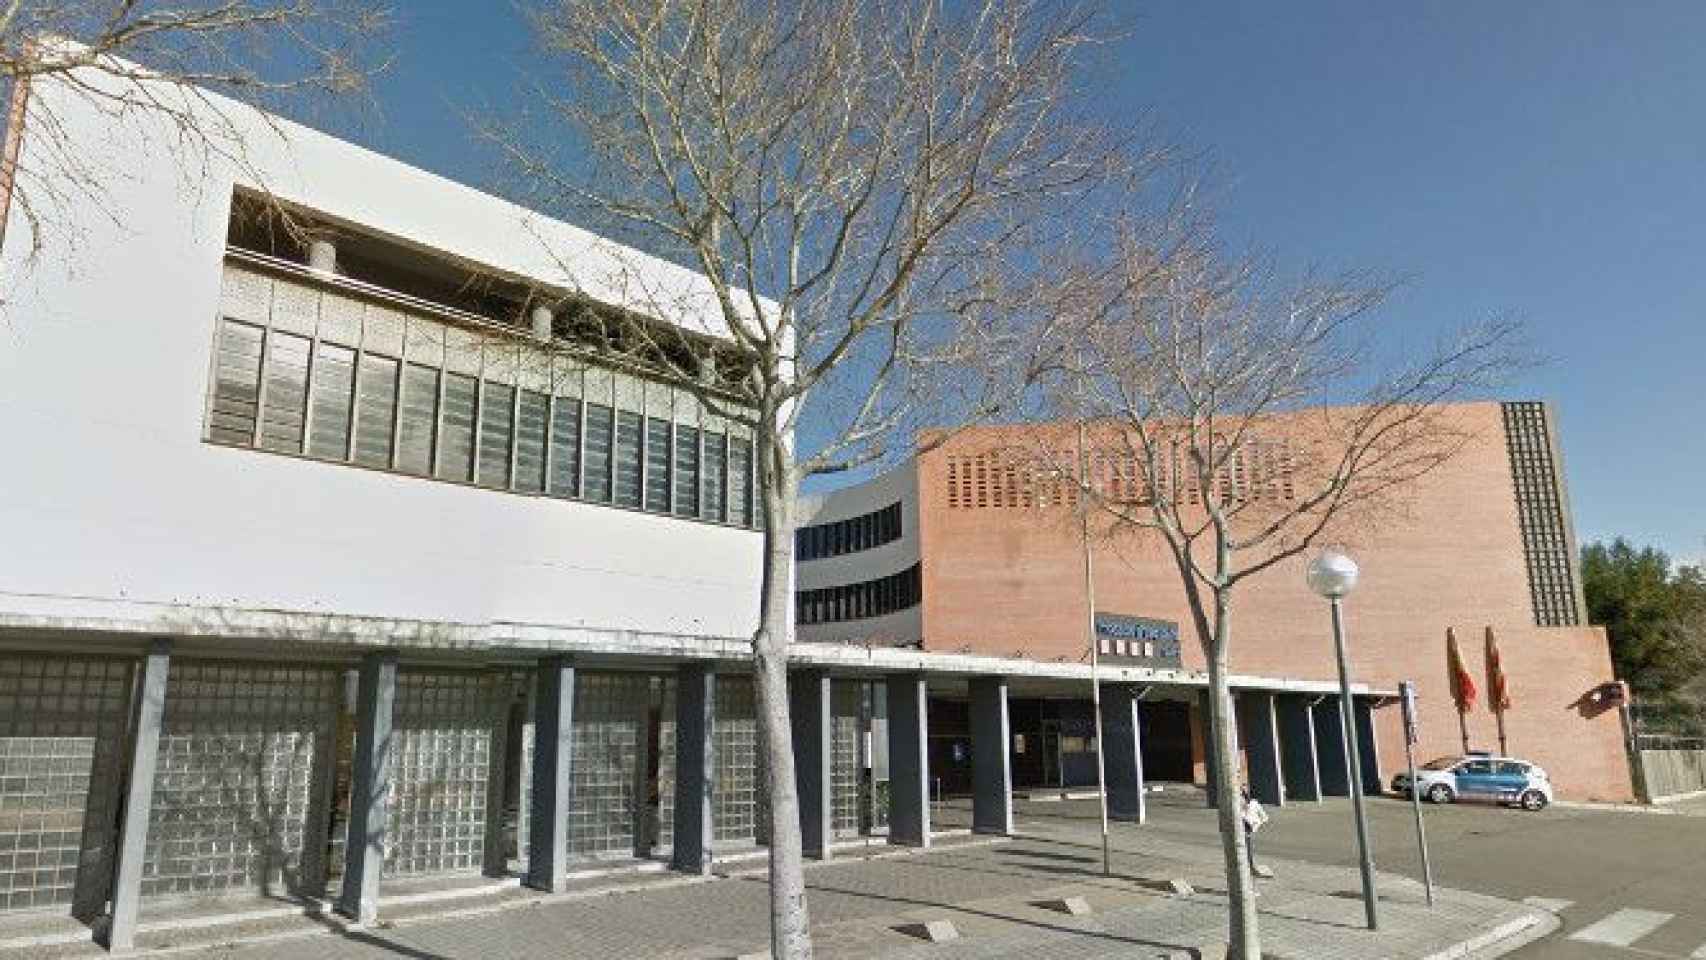 Comisaría de Mossos d'Esquadra en Nou Barris, Barcelona